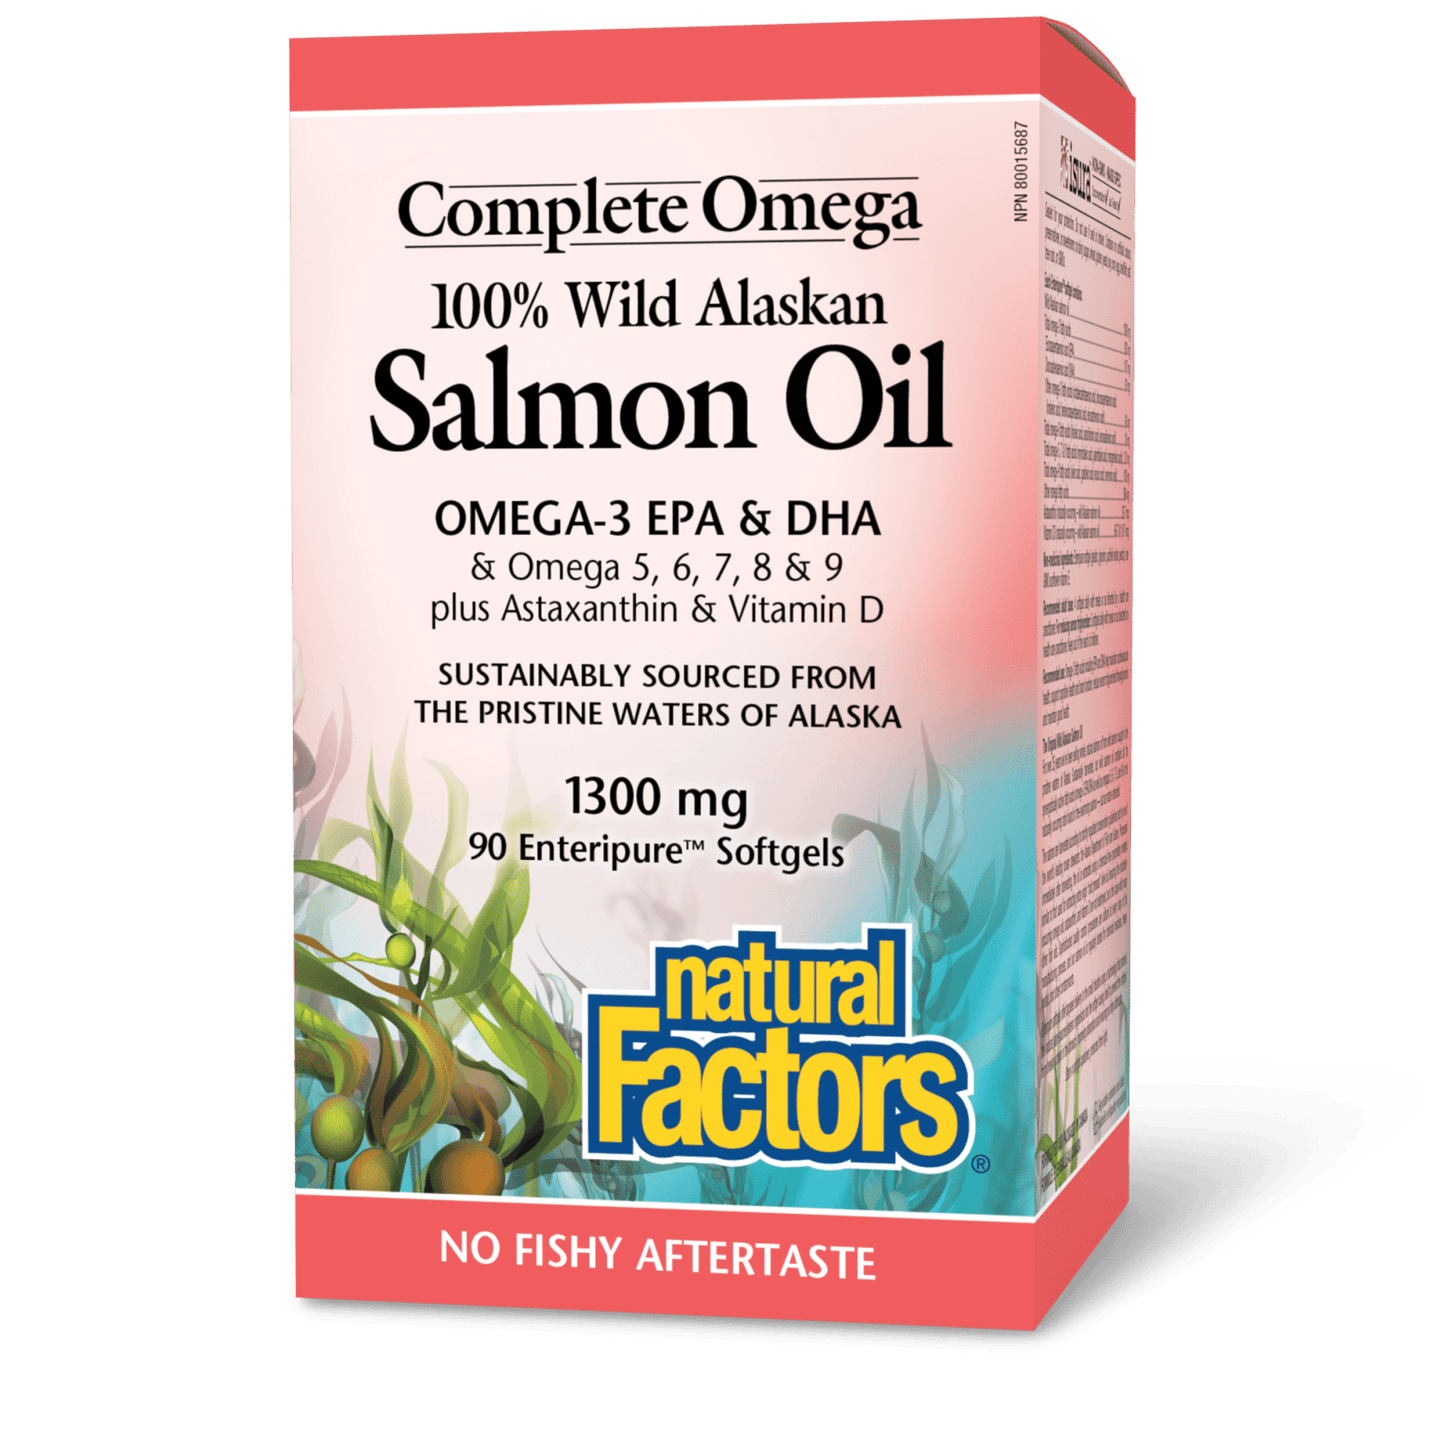 100% Wild Alaskan Salmon Oil 1300 mg, Complete Omega, Natural Factors|v|image|2265